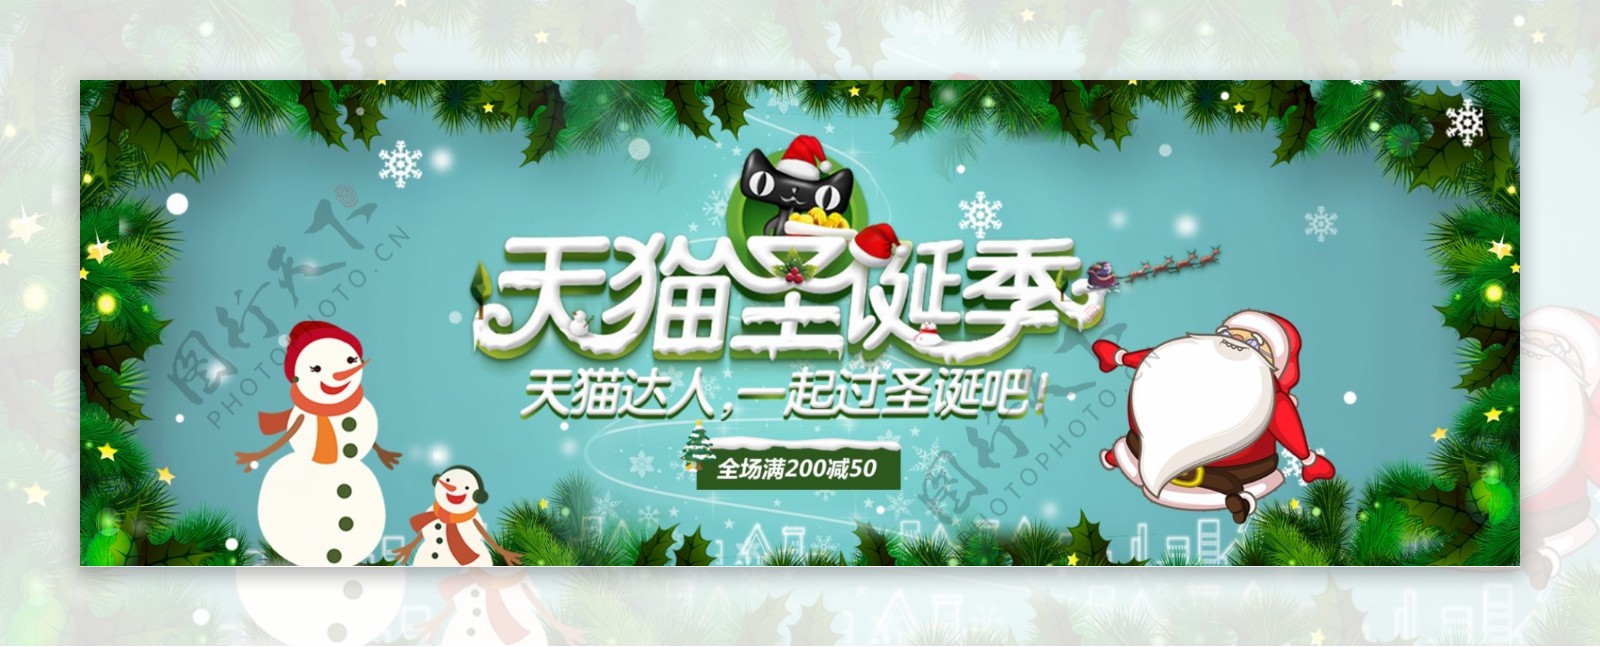 绿色雪花雪人圣诞树圣诞节淘宝banner